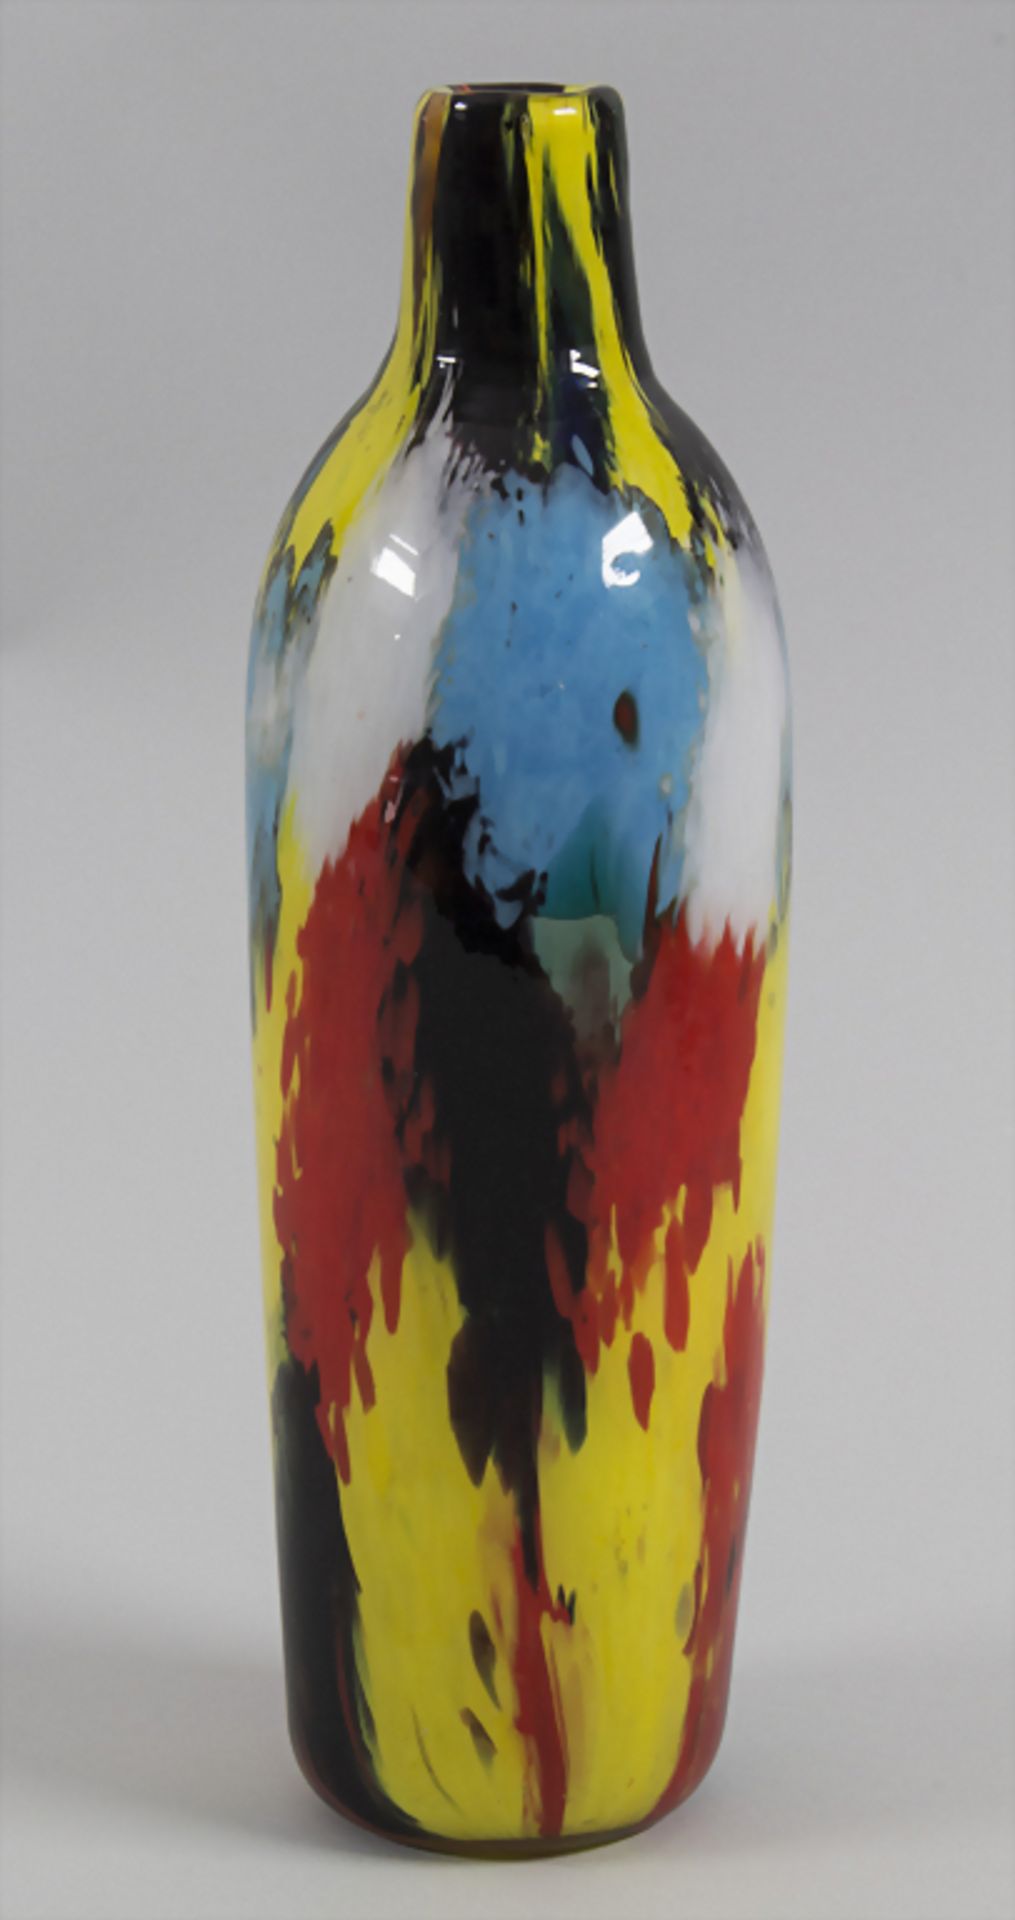 Glaszierschale 'Oriente' / A decorative vase 'Oriente', Aureliano Toso, Entw. Dino Martens, - Image 3 of 6